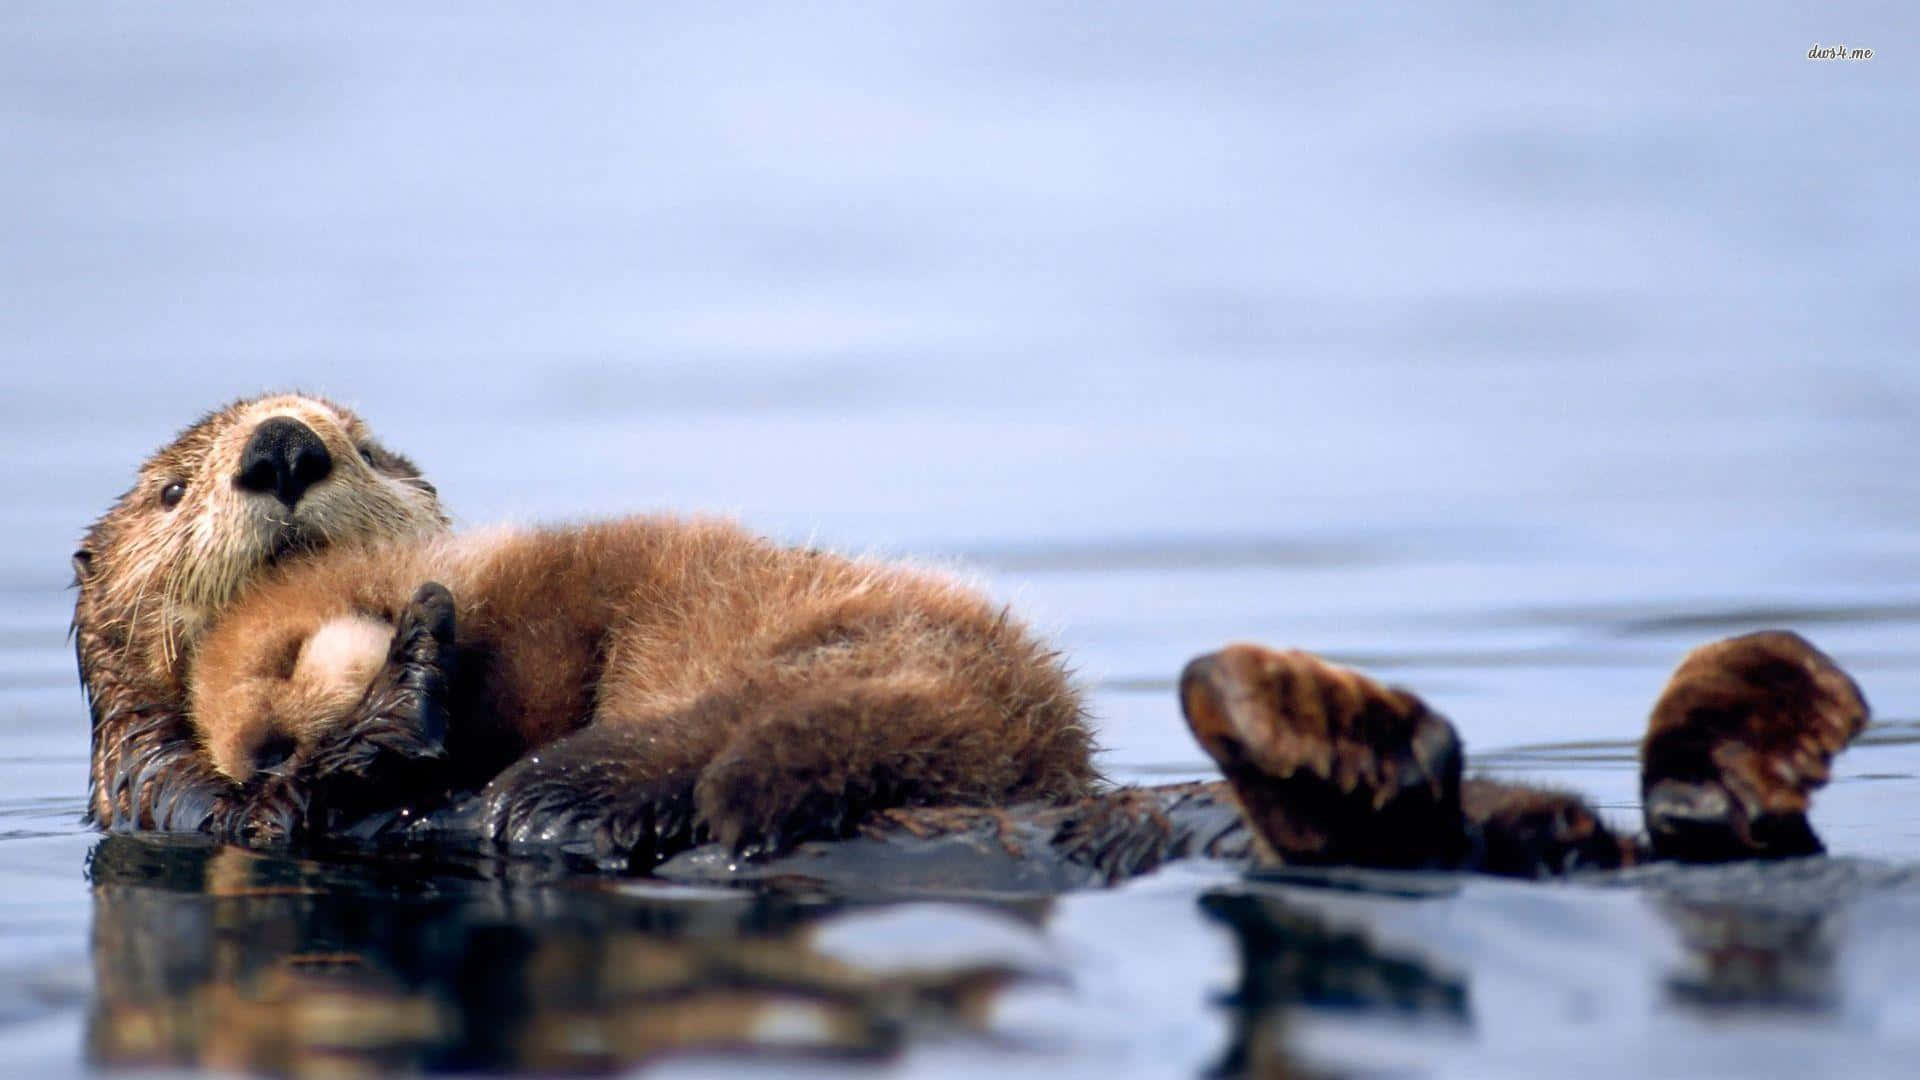 A Beautiful Sea Otter